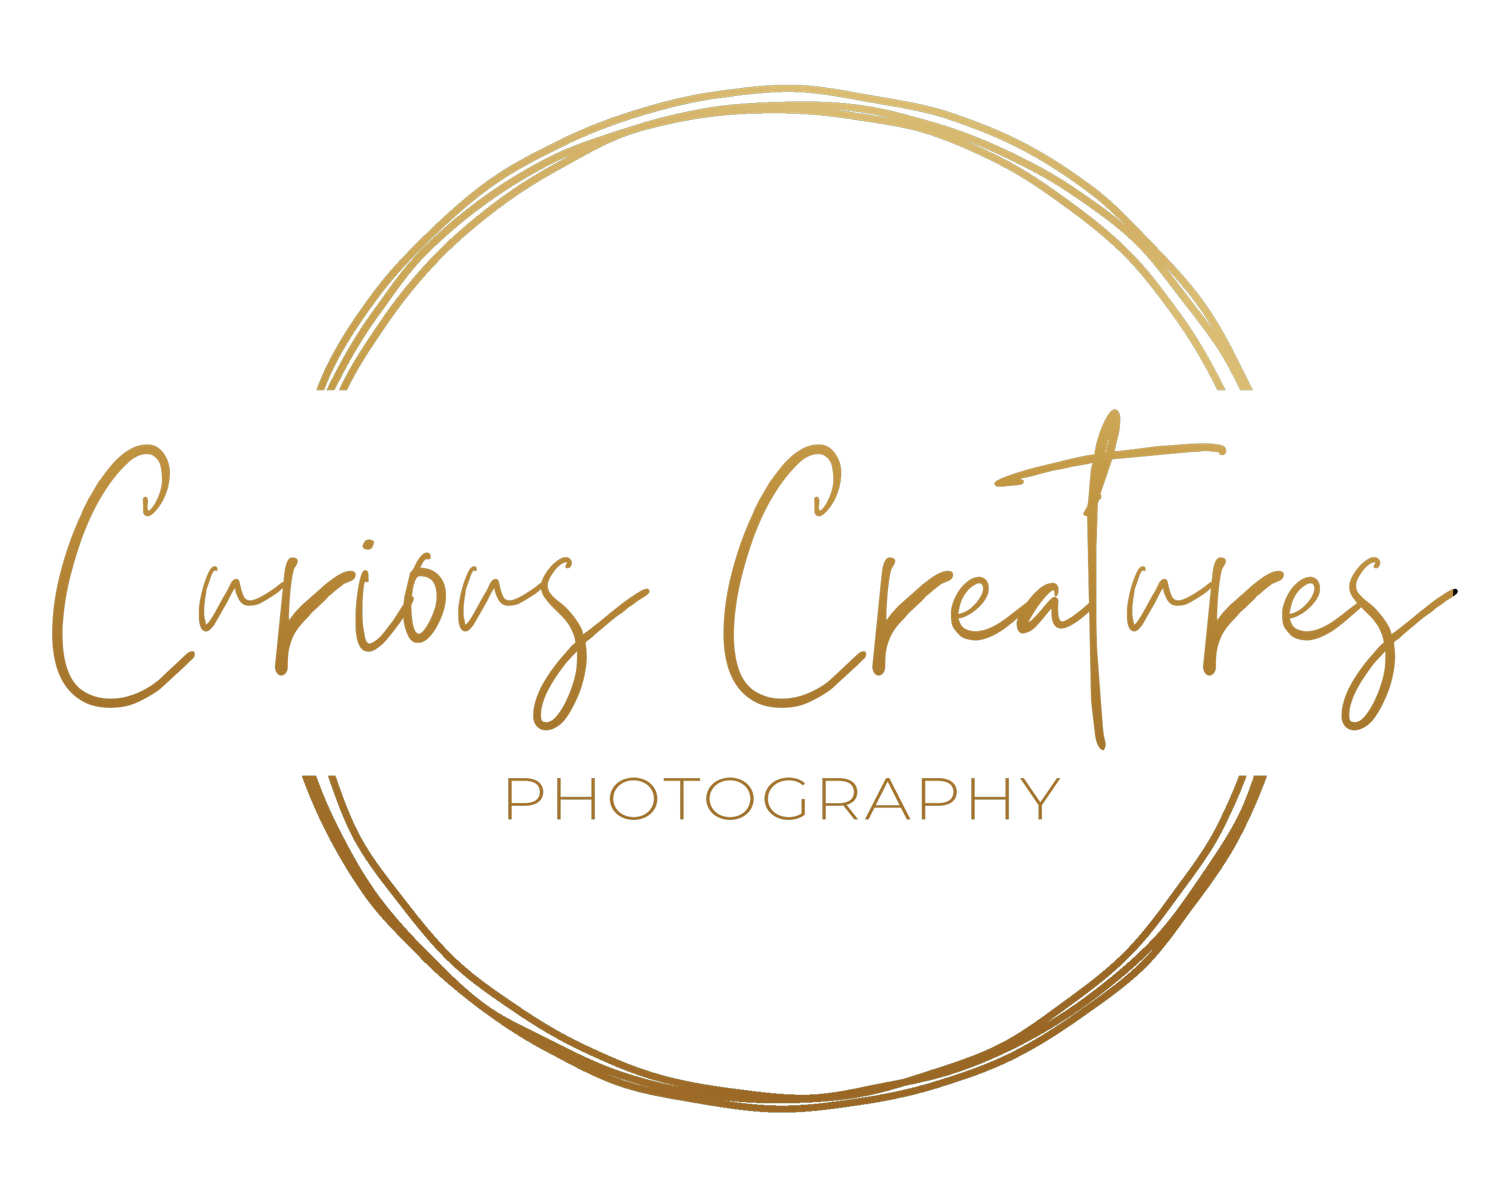 Curious Creatures Photography